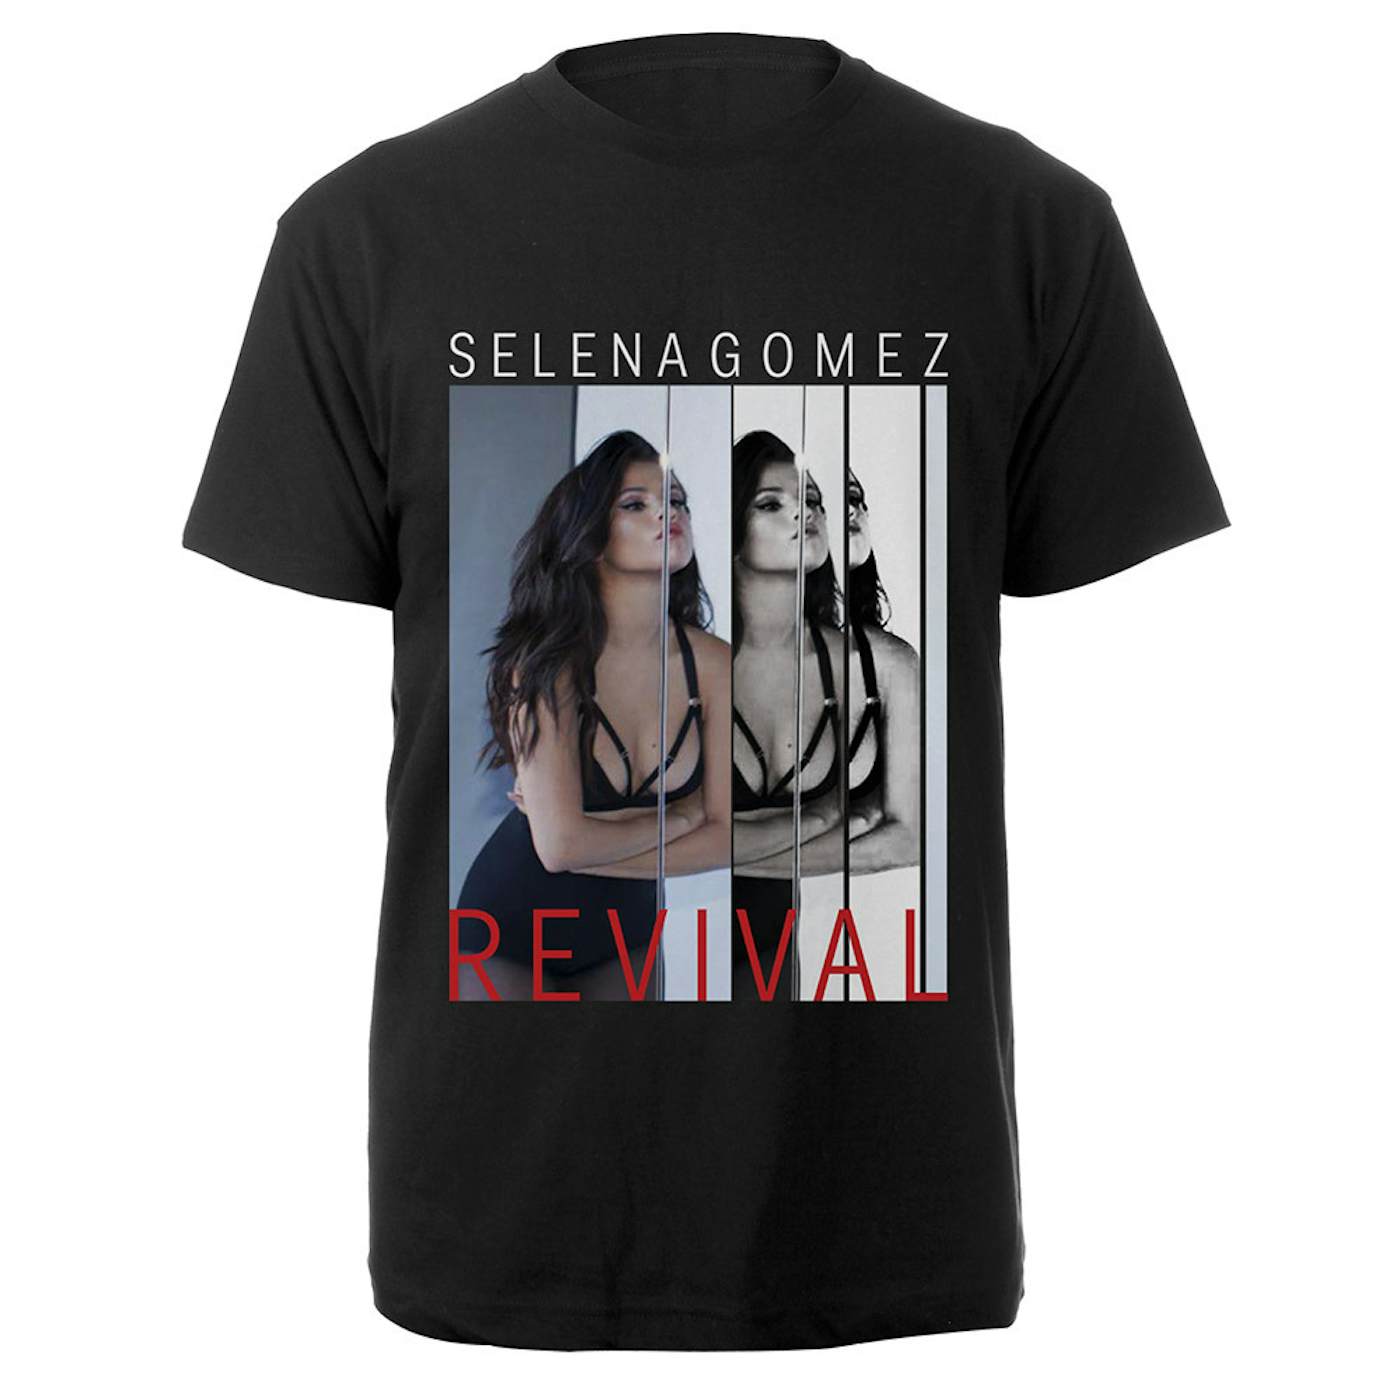 Selena Gomez Revival Mirror Photo Tee